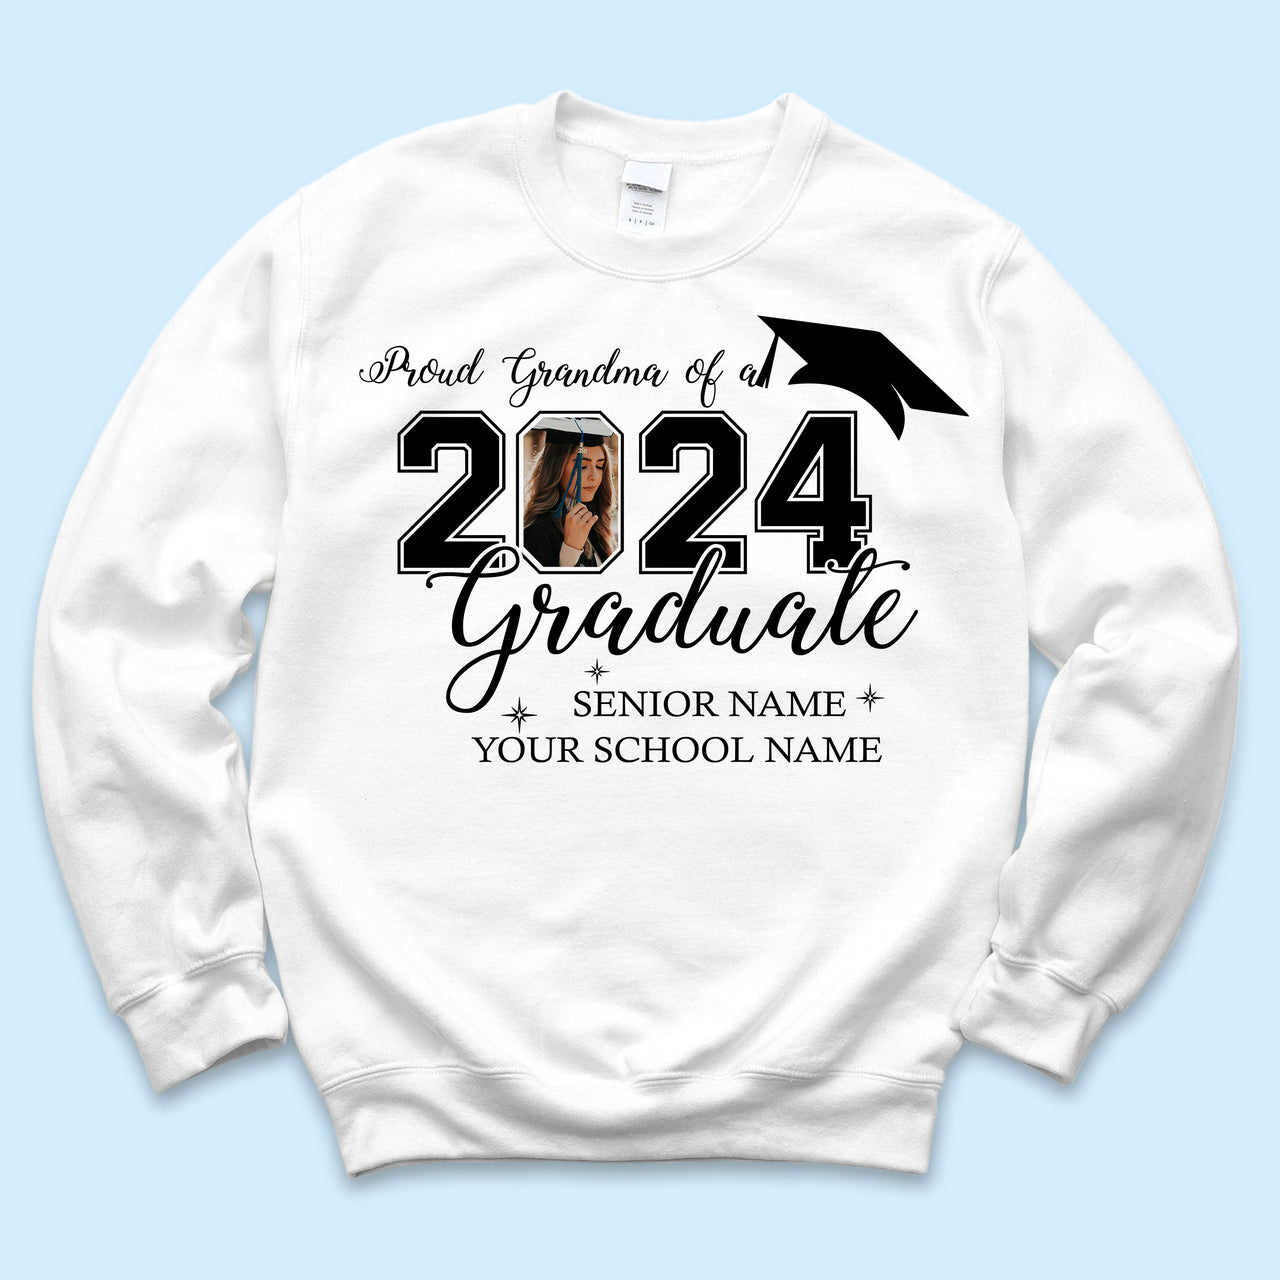 Custom Photo Proud Mom Dad Of A 2024 Graduate Shirts, Graduation Gift Merchize